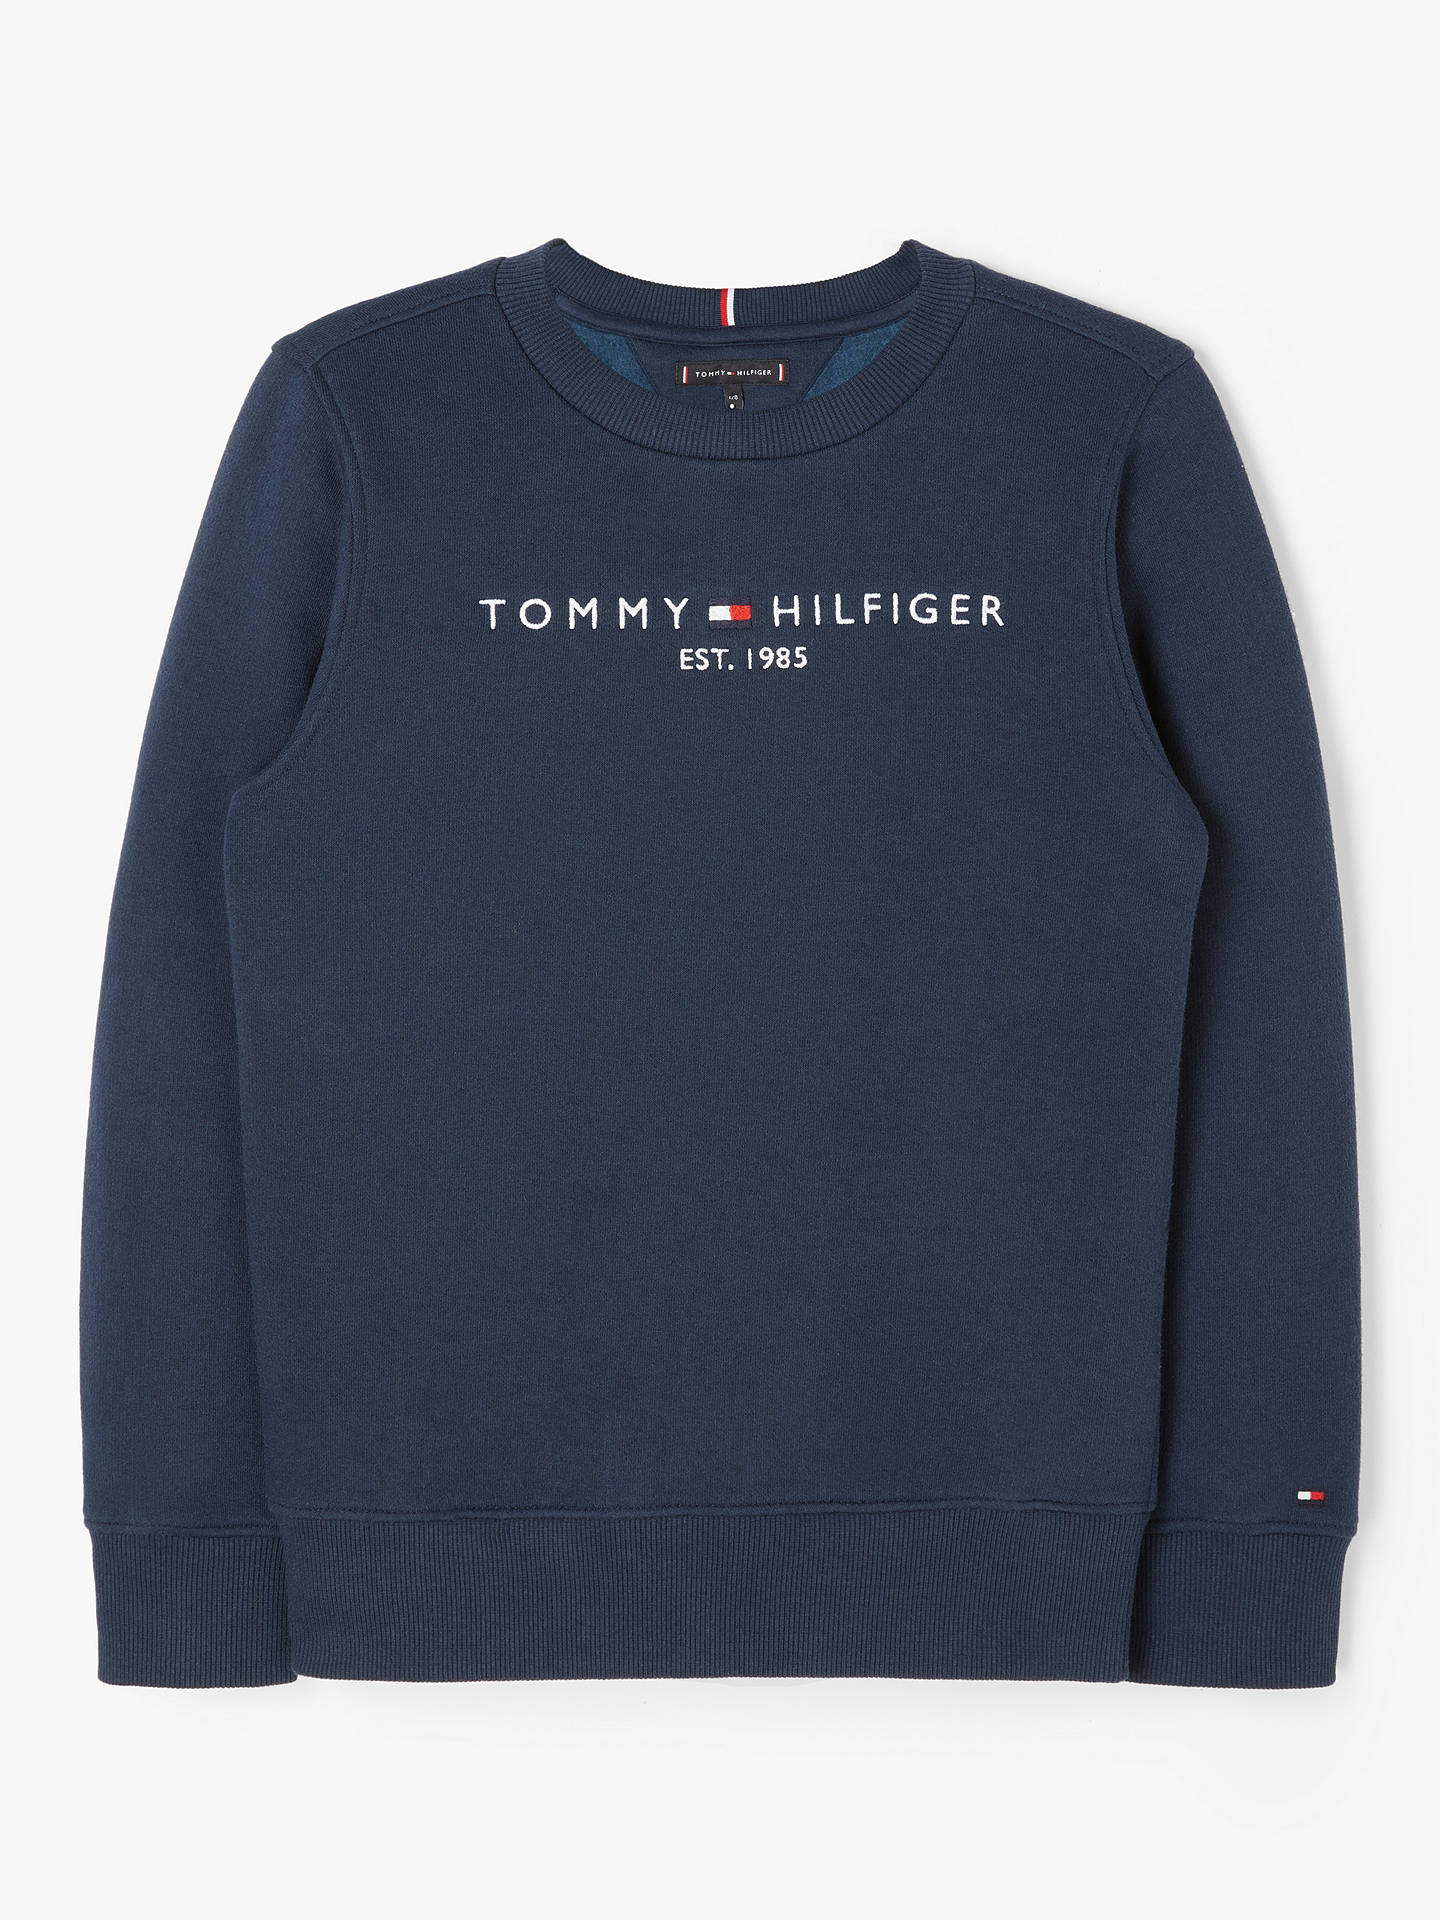 Tommy Hilfiger Boys' Essential Sweatshirt, Navy at John Lewis & Partners